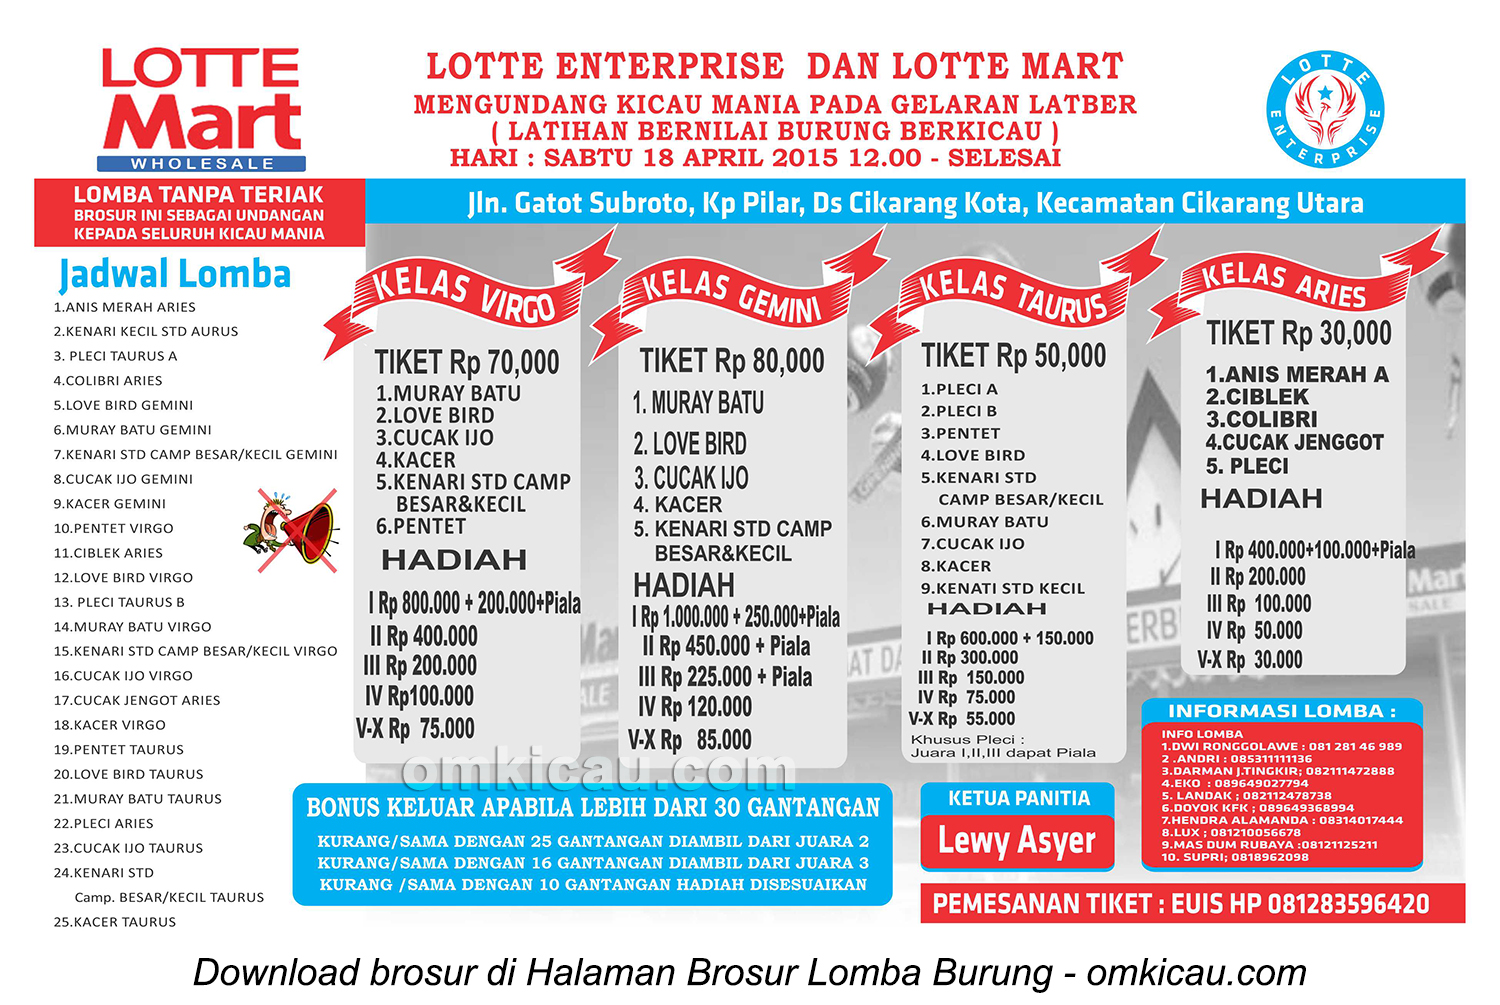 Brosur Latber Burung Berkicau Lotte Enterprise, Cikarang, 18 April 2015